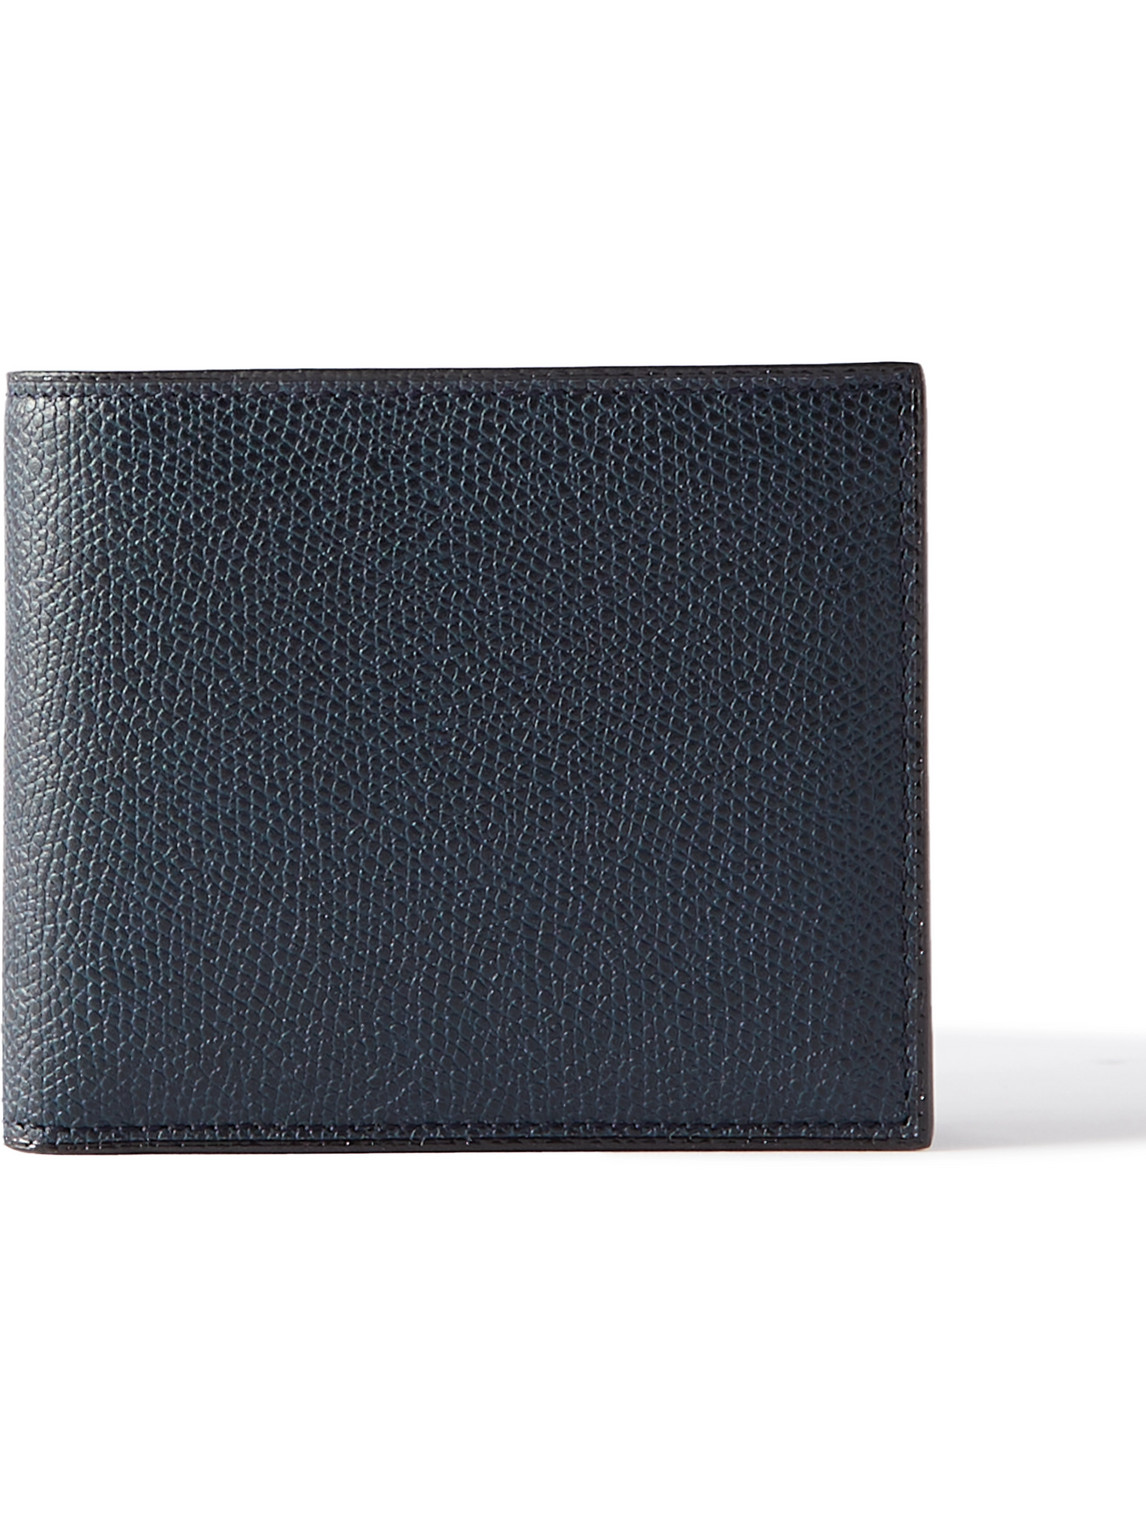 Valextra Pebble-grain Leather Billfold Wallet In Blue